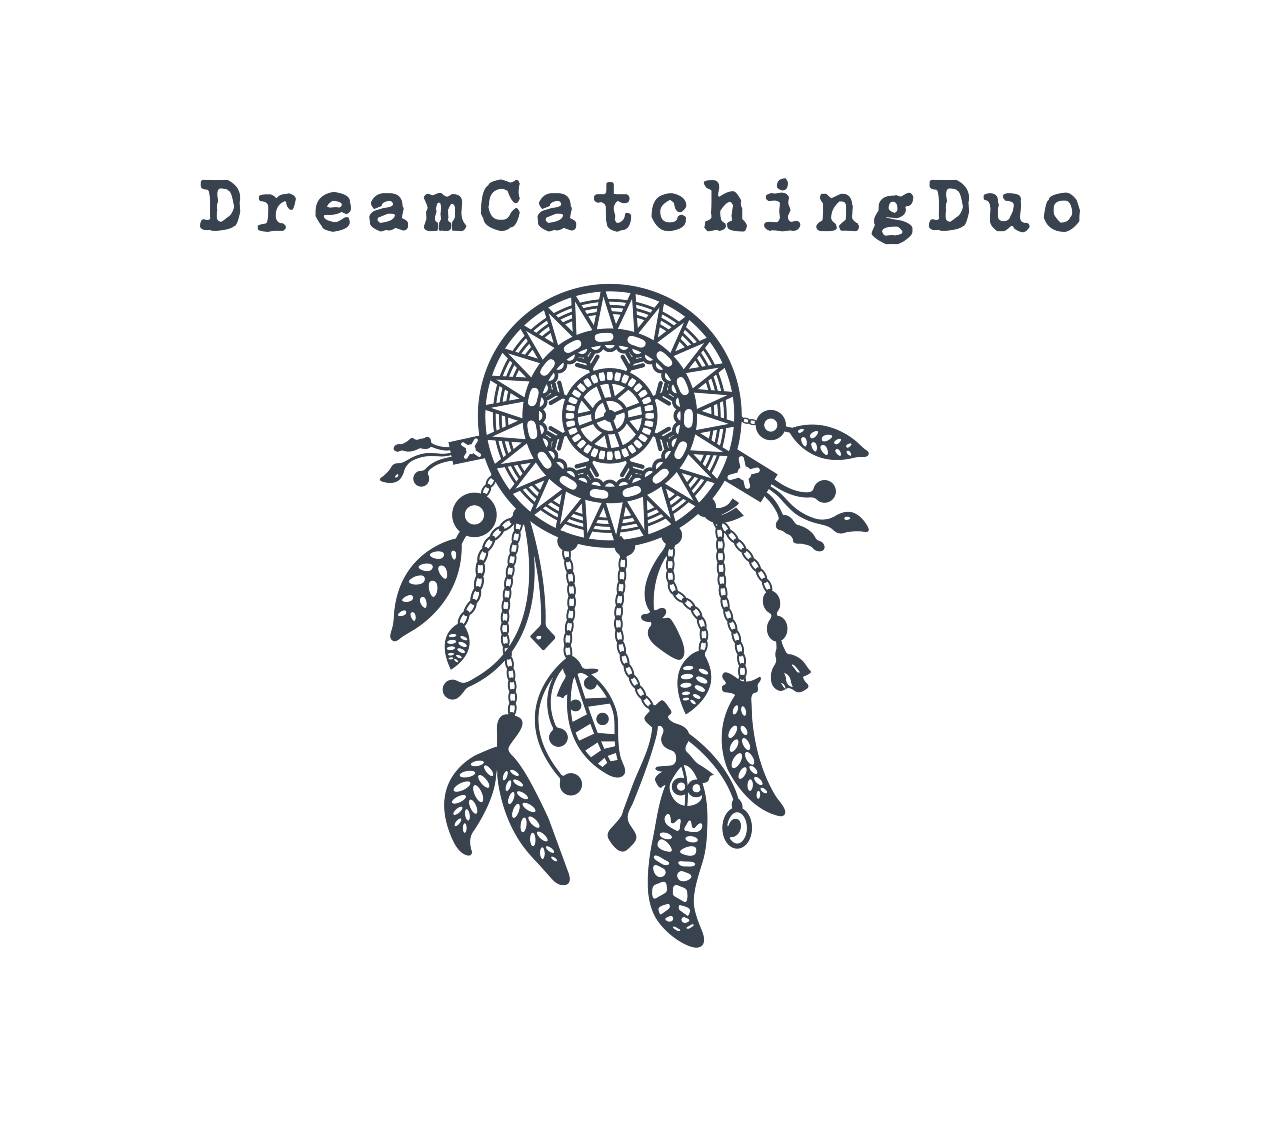 DreamCatchingDuo